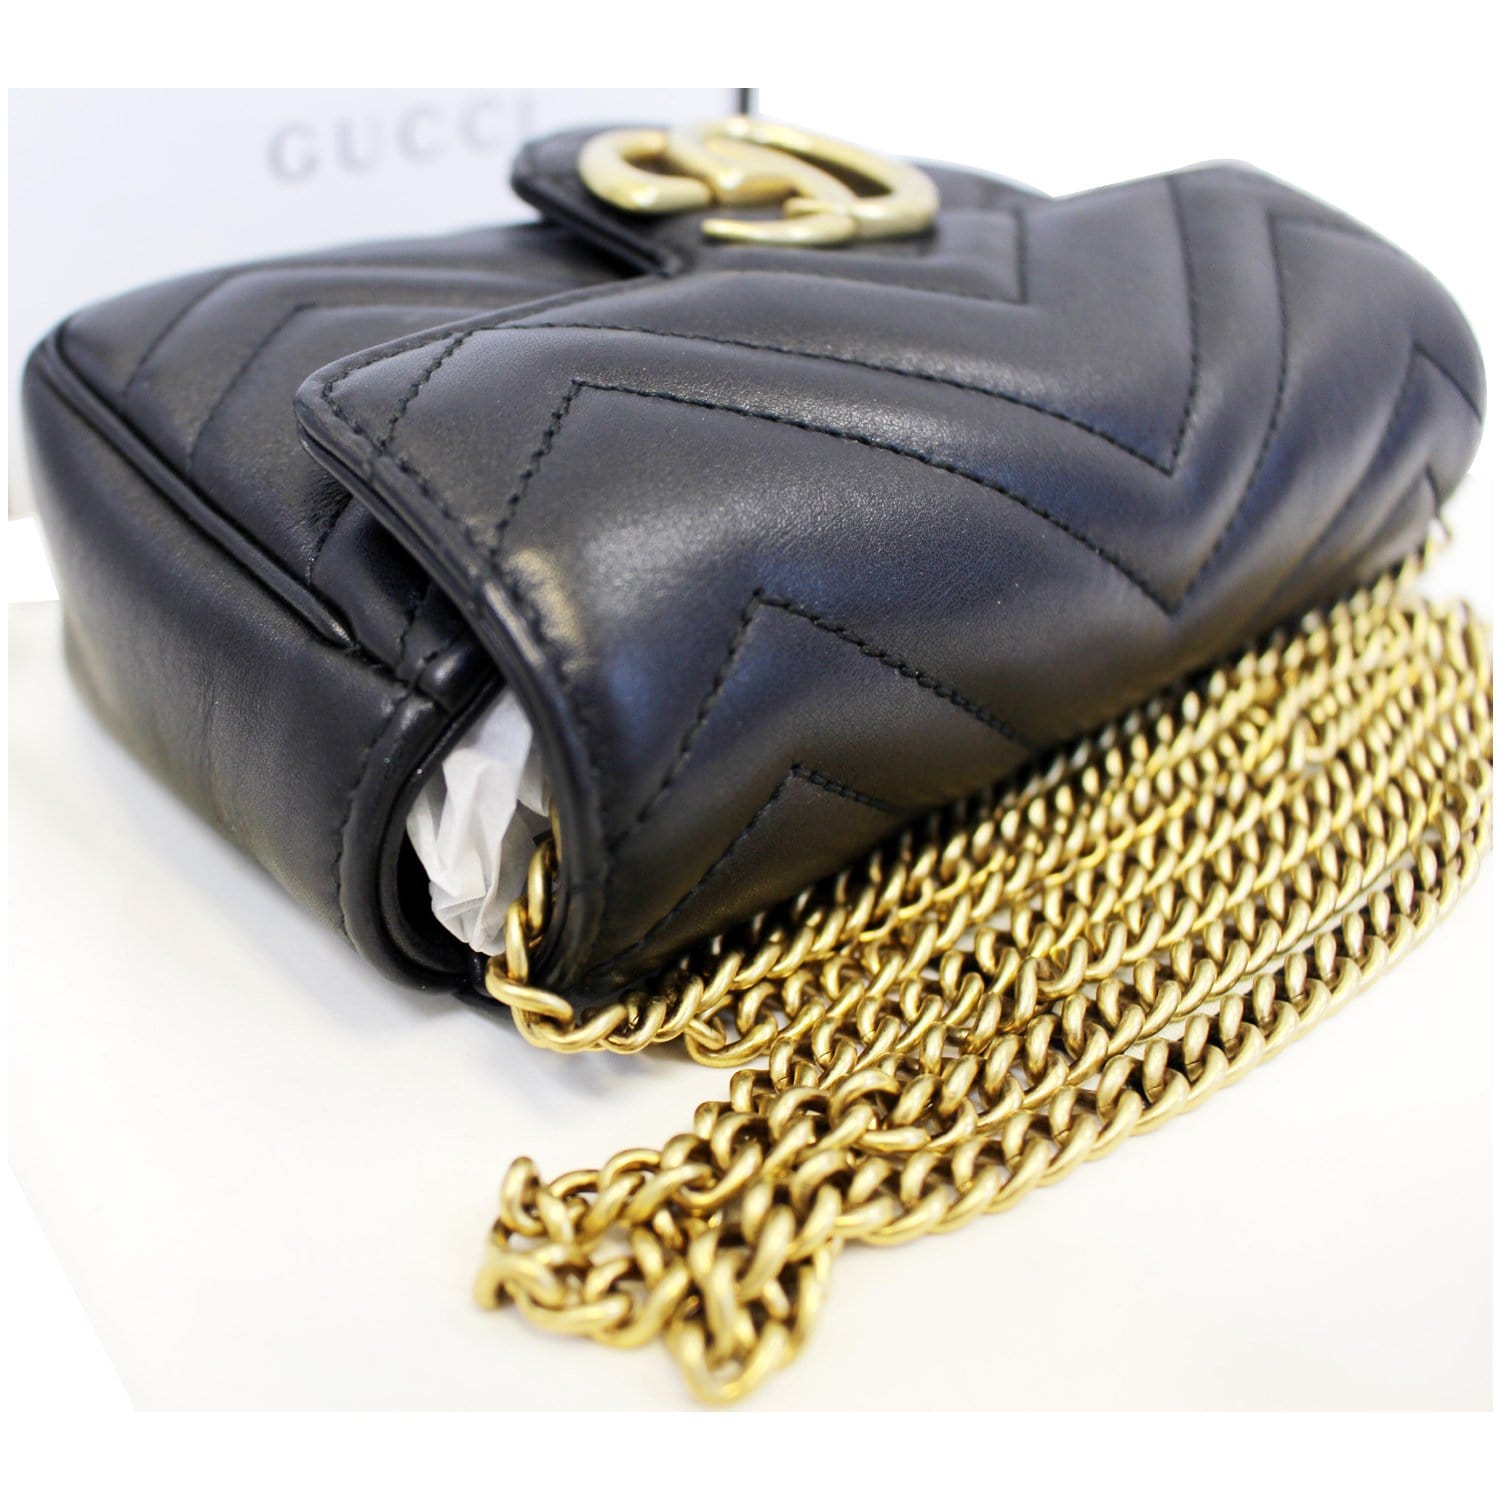 GG Marmont super mini bag in black leather